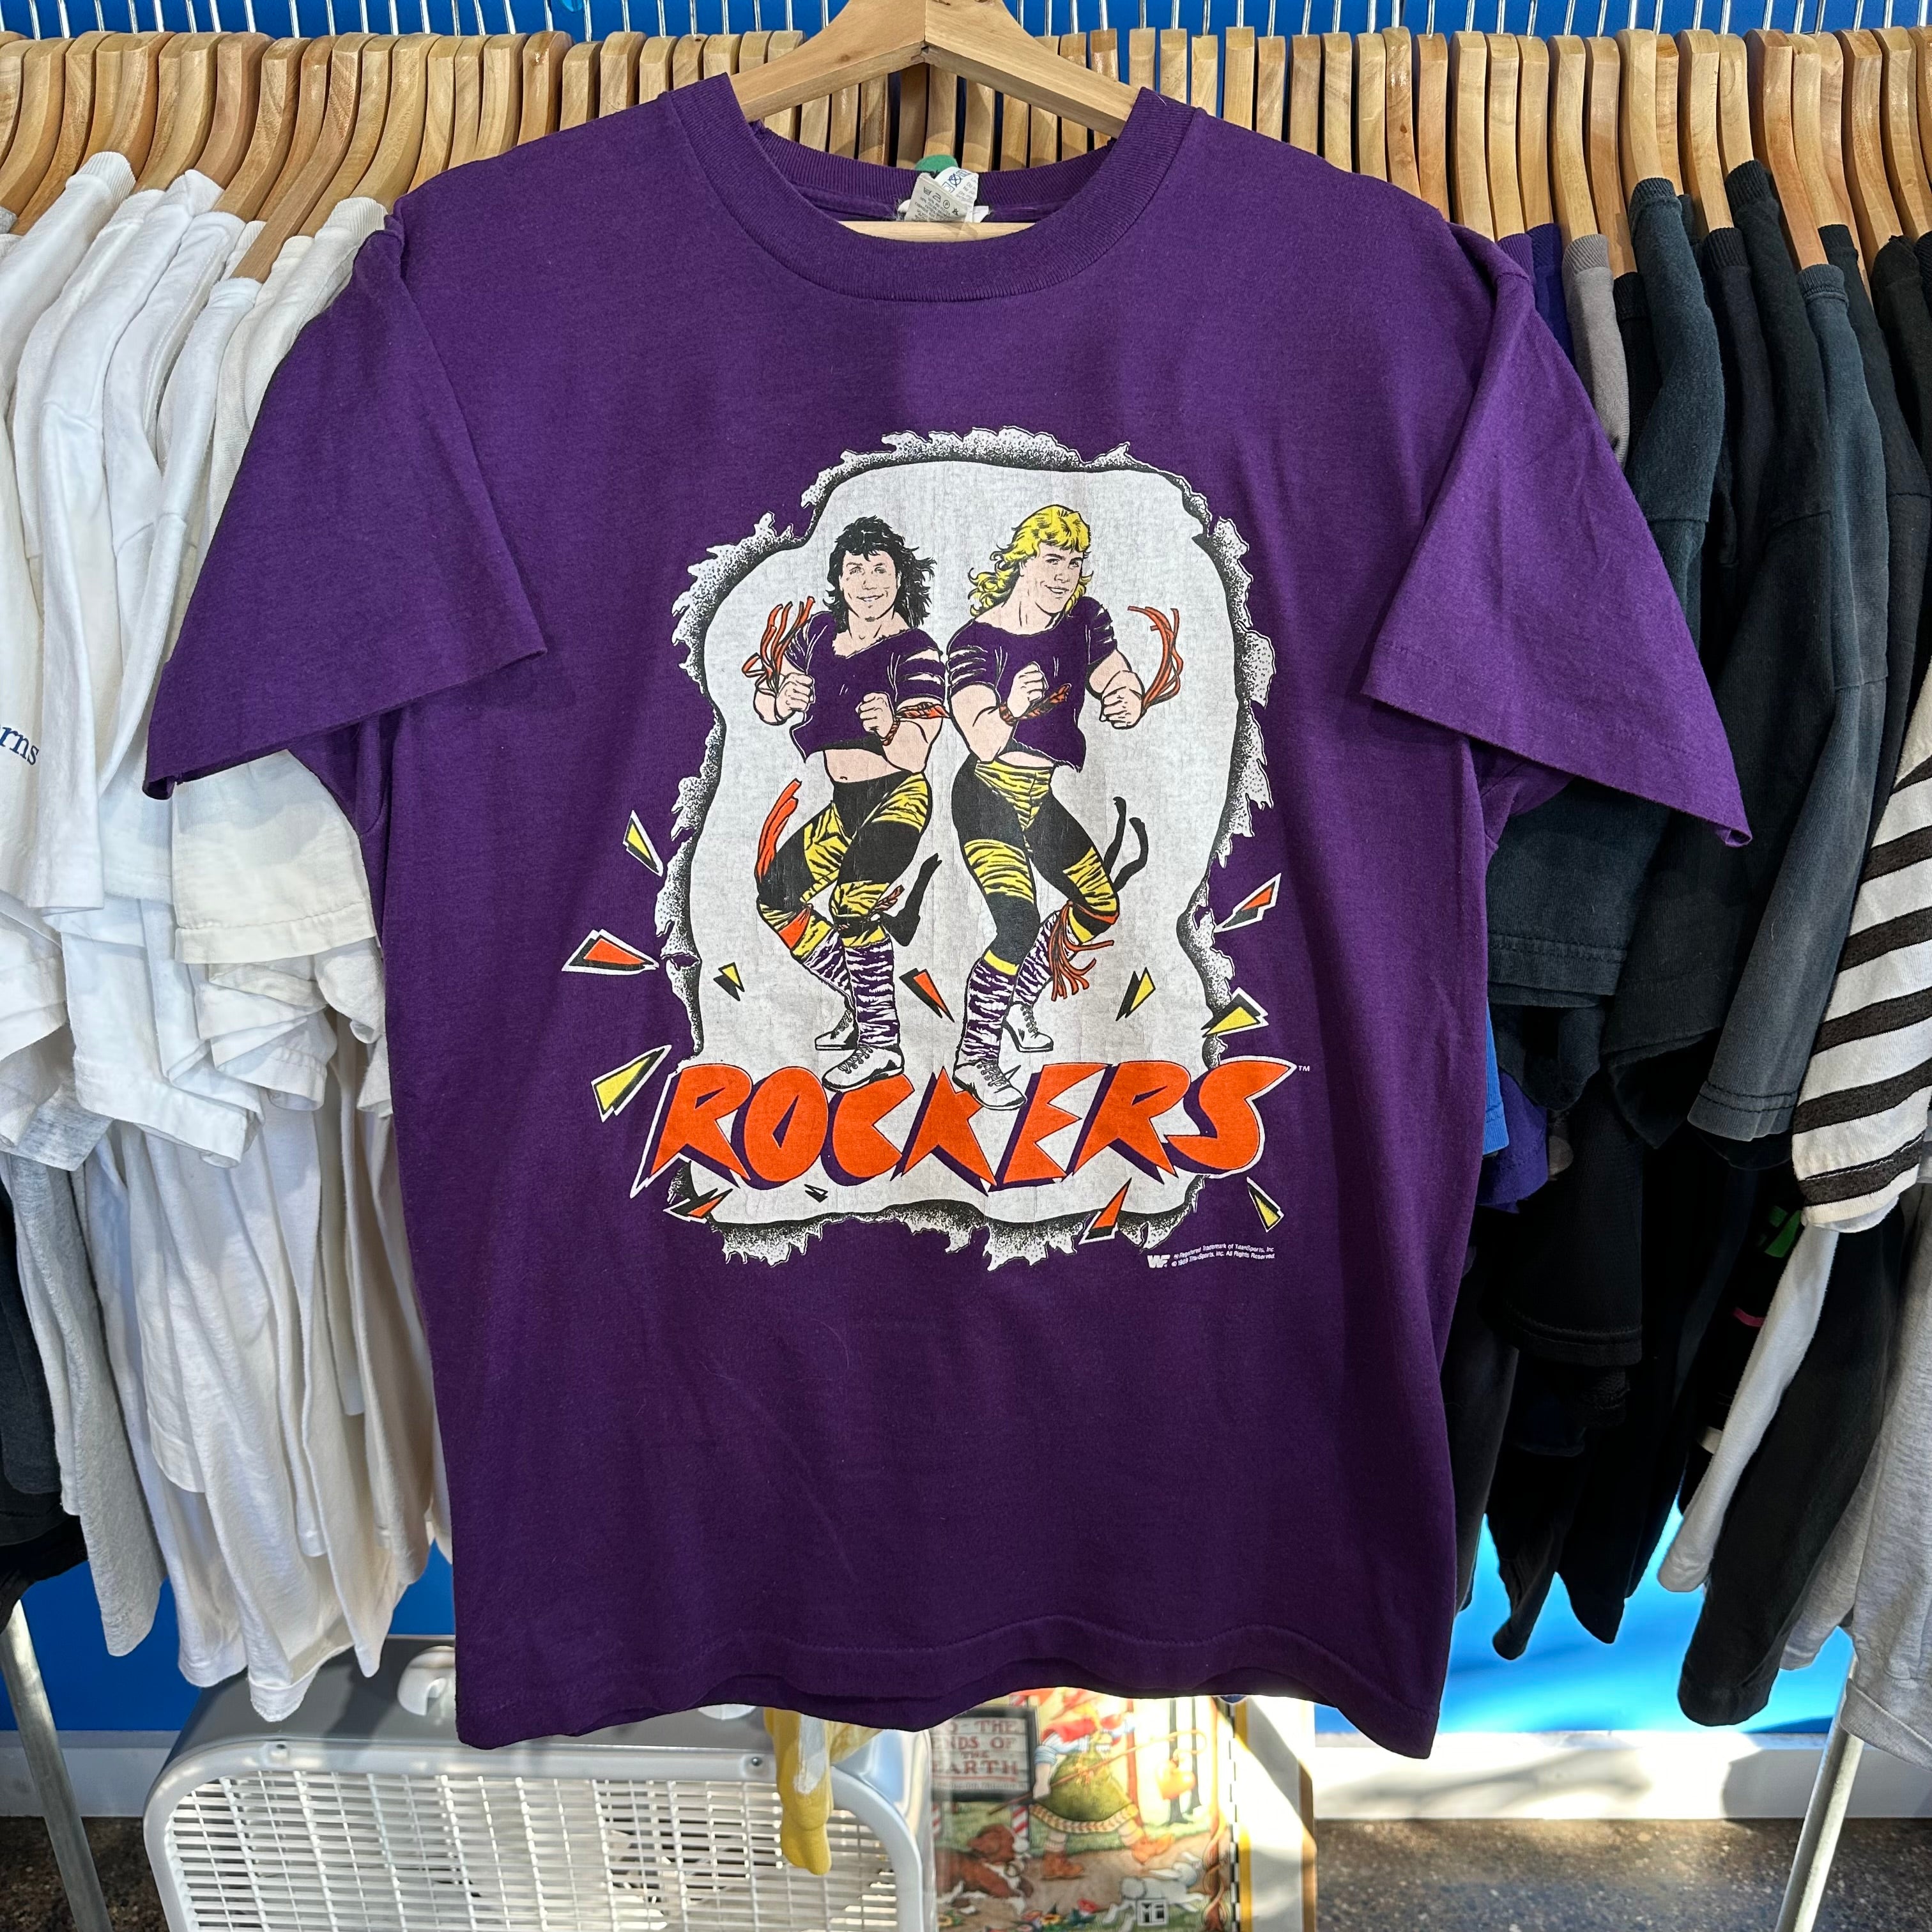 The Rockers Wrestling T-Shirt